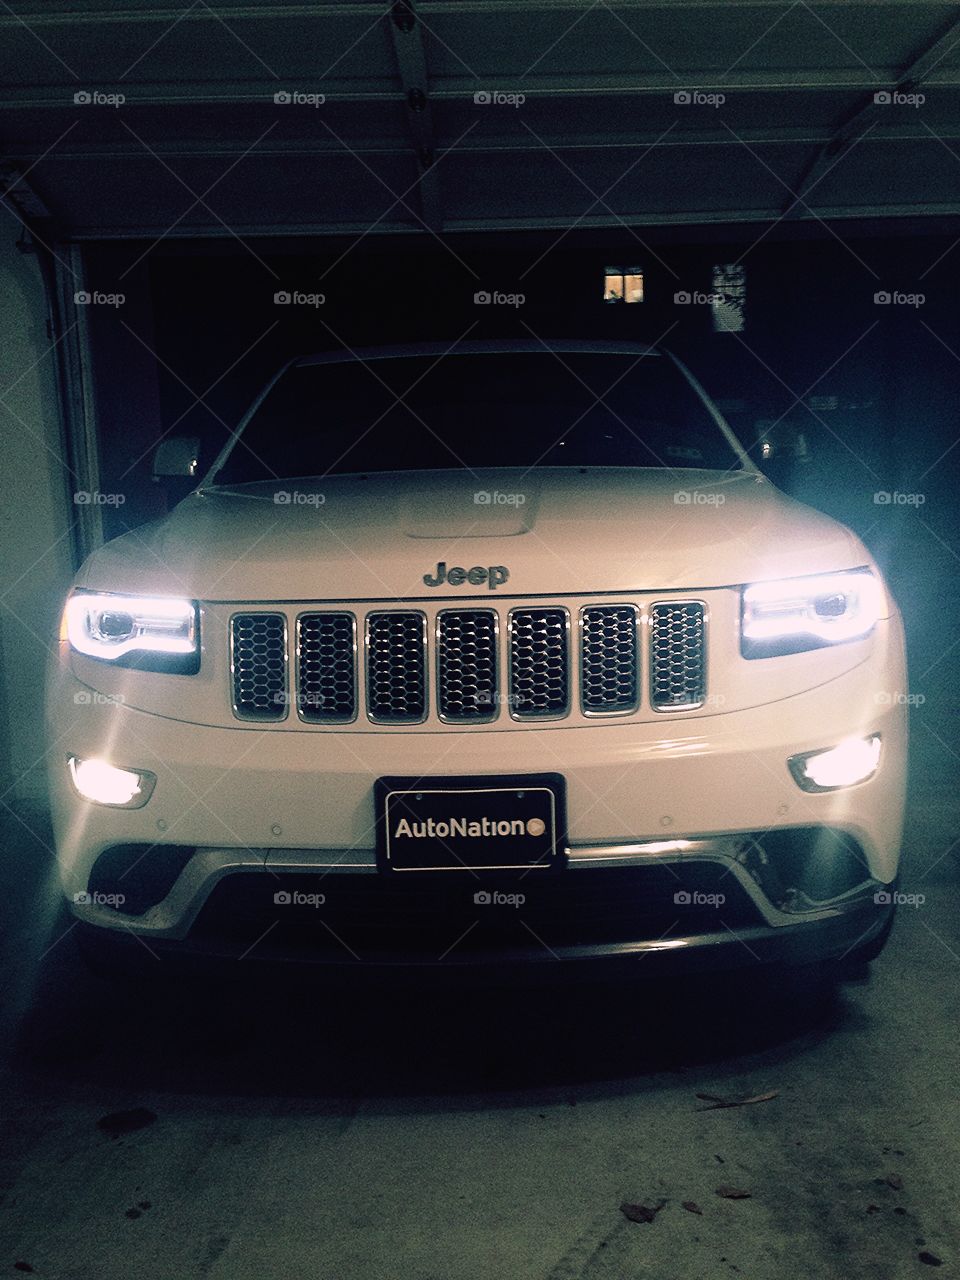 Jeep Grand Cherokee Summit. Autonation dealership